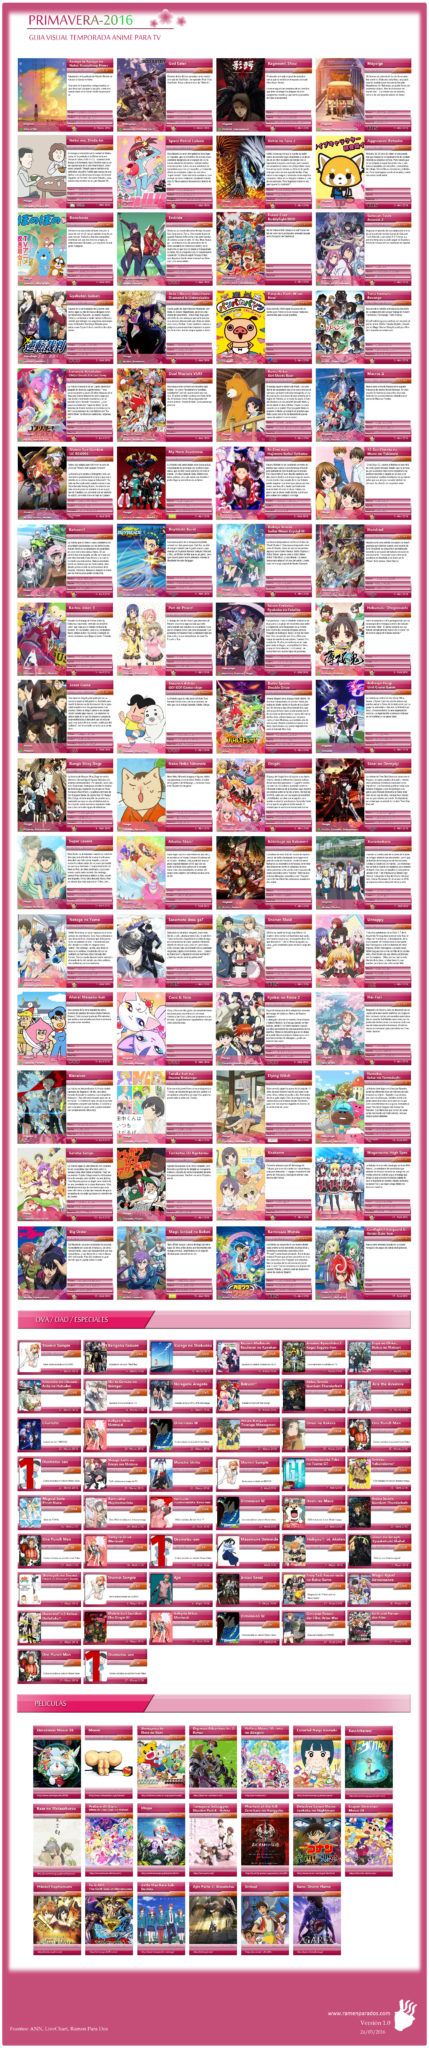 Novedades trimestrales de Anime - Página 4 Guia-Visual-Anime-Primavera16-v1_1